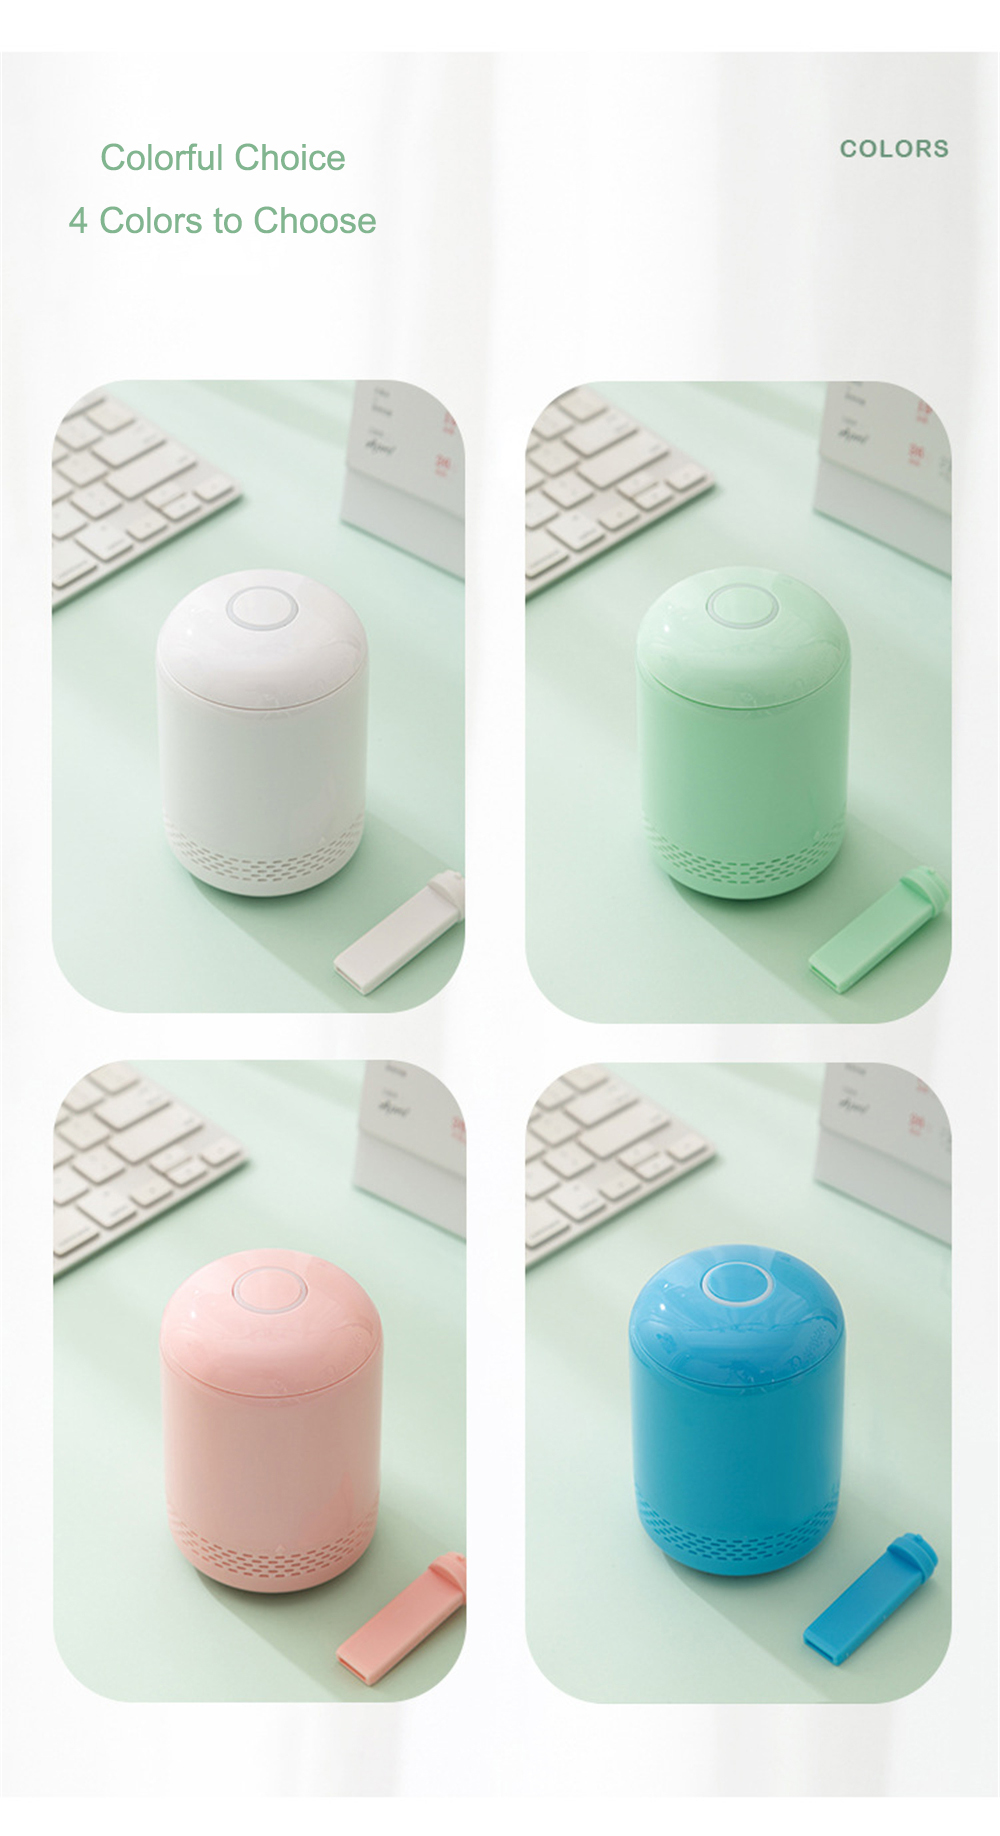 WhitePinkGreen-Portable-Desktop-Mini-Vacuum-Cleaner-Small-USB-Rechargeable-Home-Desktop-Scraps-Dust--1751952-13